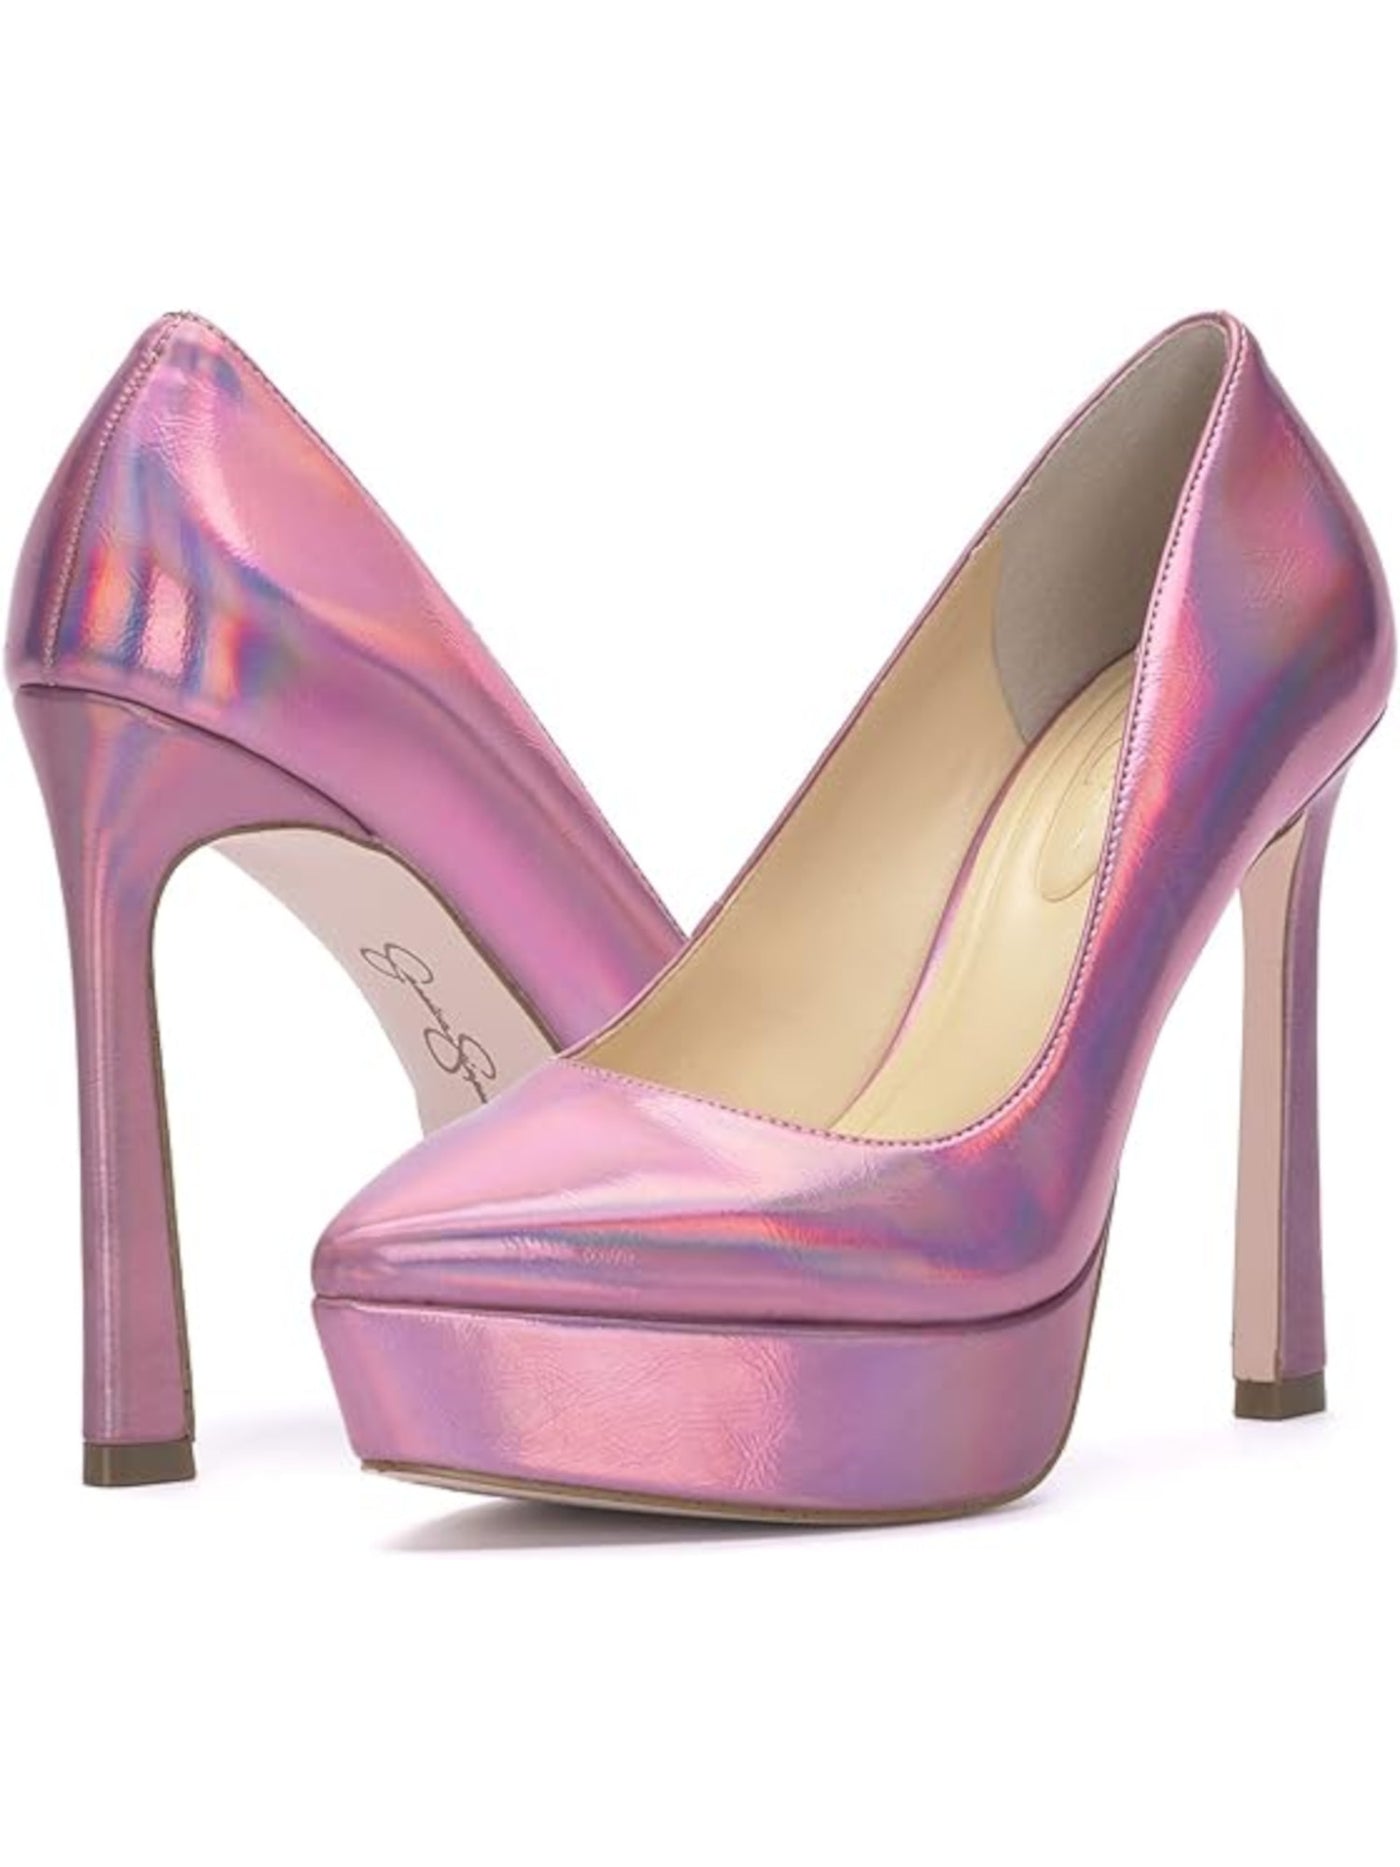 JESSICA SIMPSON Womens Pink 1" Platform Cushioned Jariah Pointed Toe Platform Slip On Dress Pumps Shoes 11 M